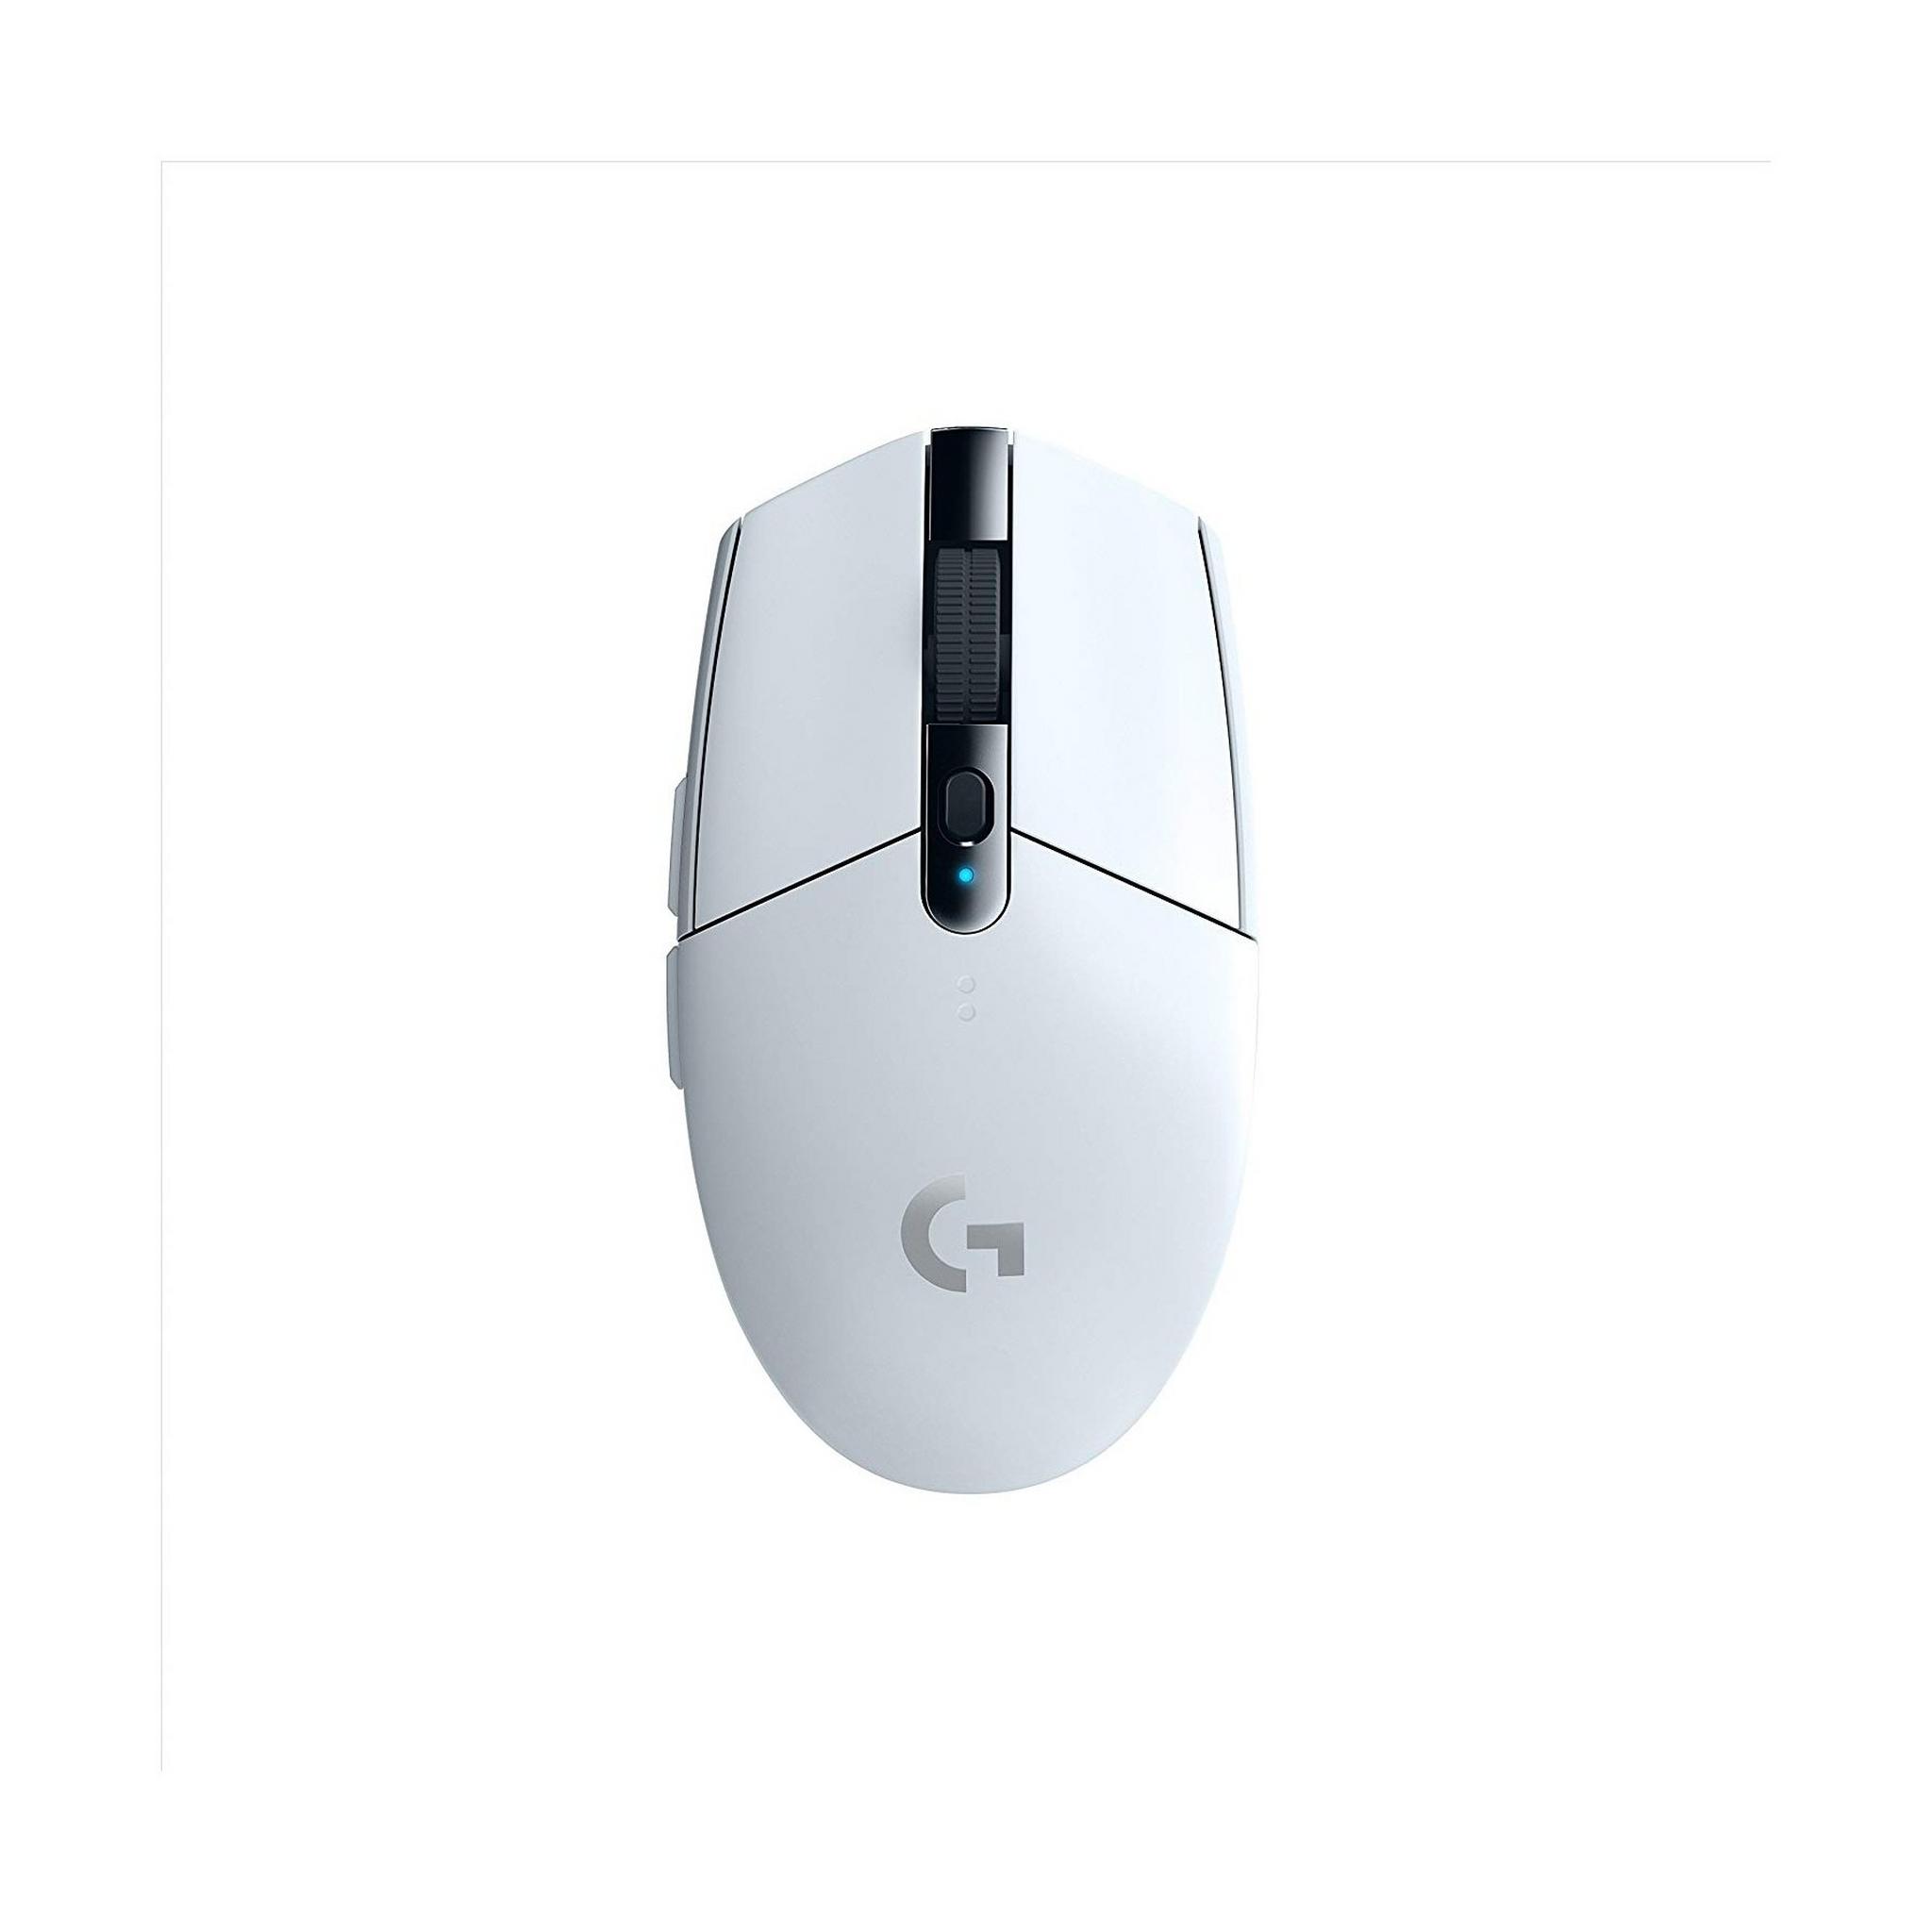 Logitech G305 Lightspeed Wireless Gaming Mouse - White